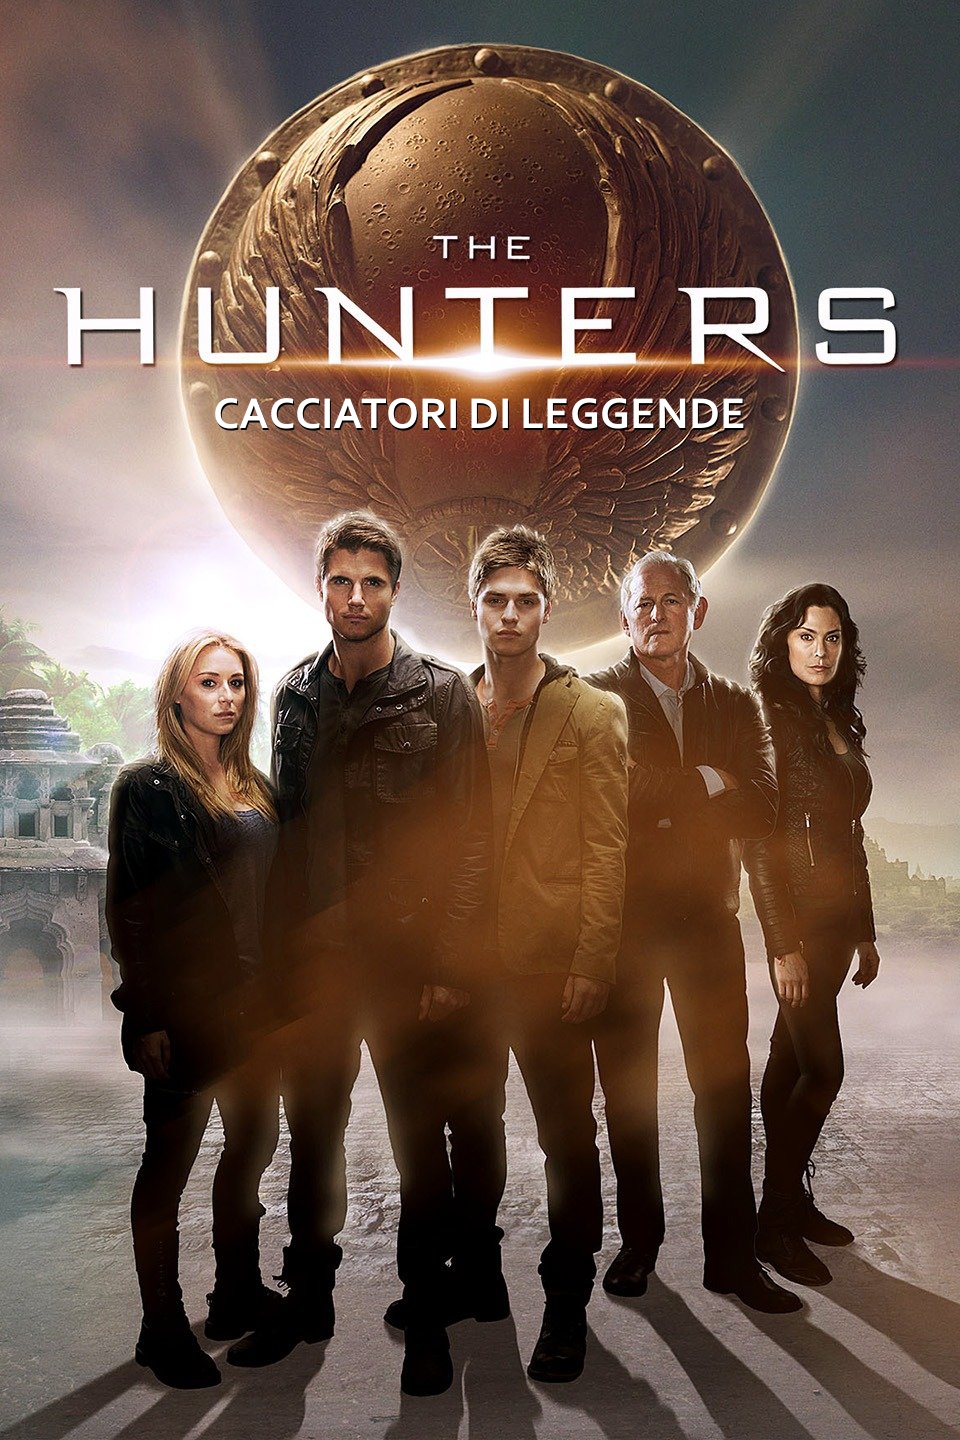 The Hunters – Cacciatori di Leggende [HD] (2013)